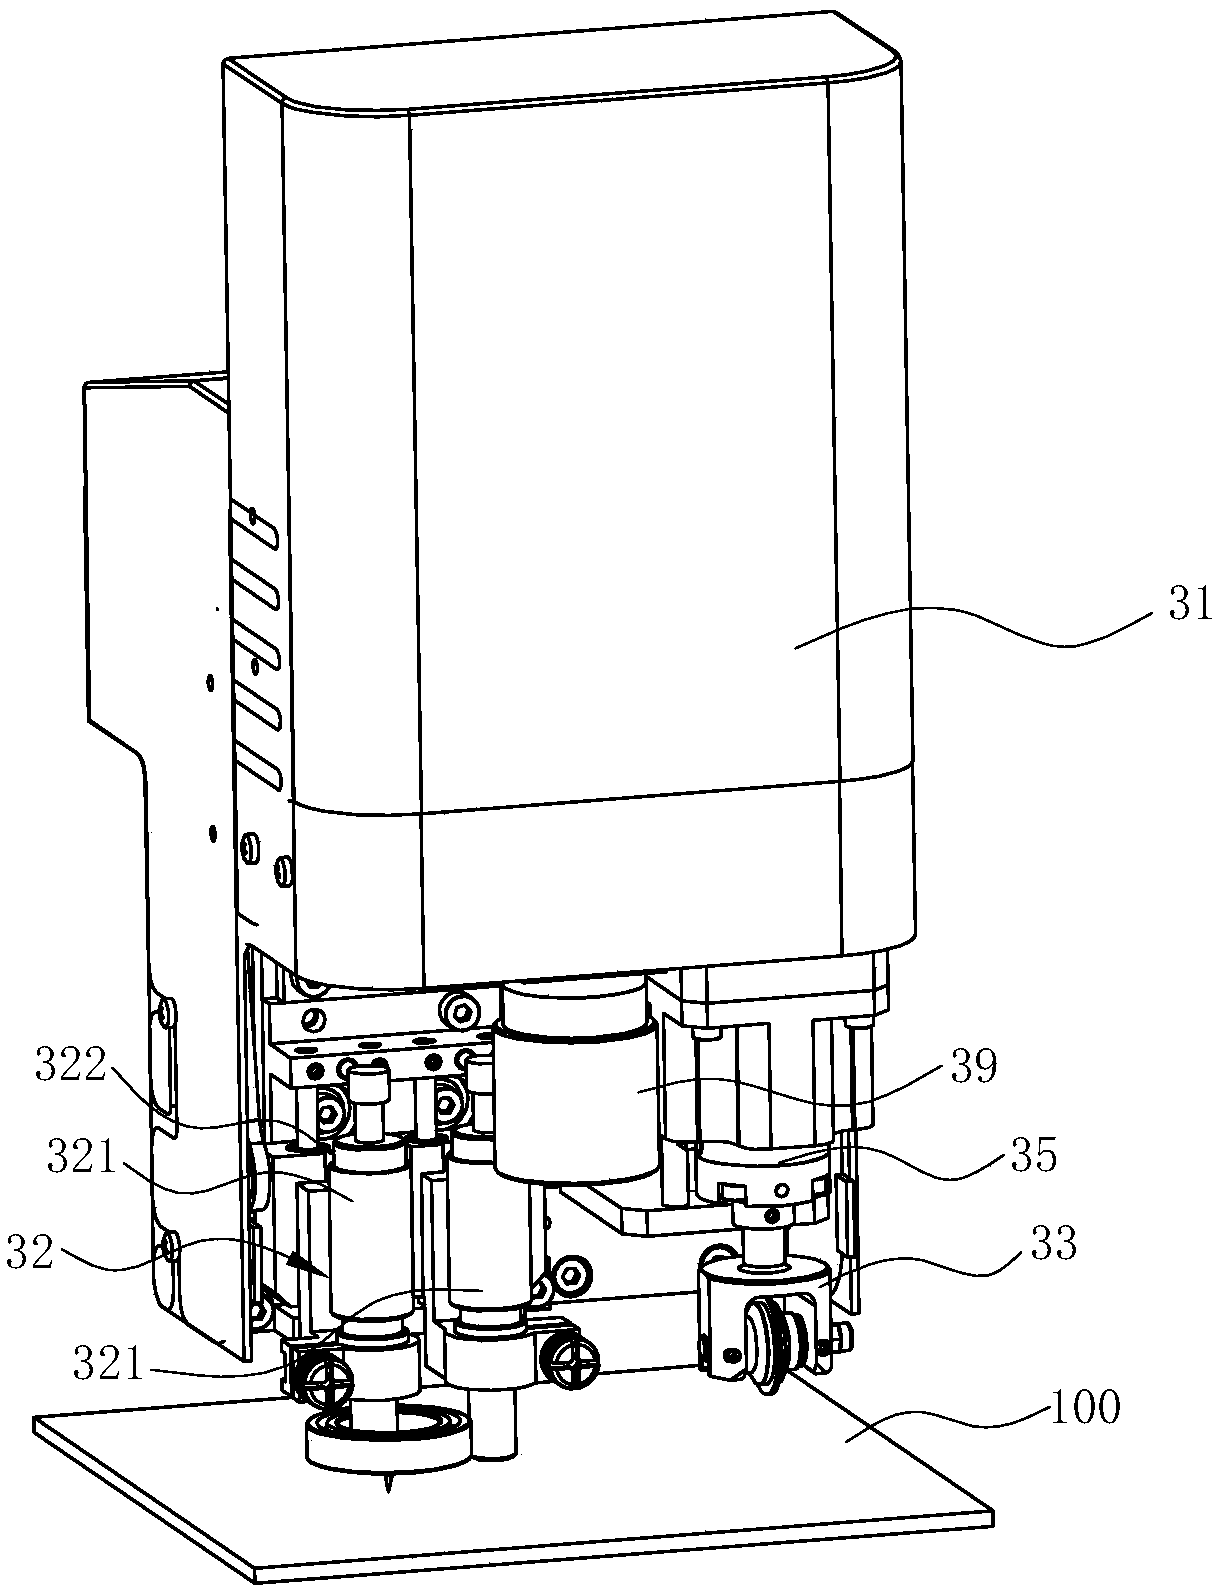 Machine head of graphic paper feeding and cutting machine